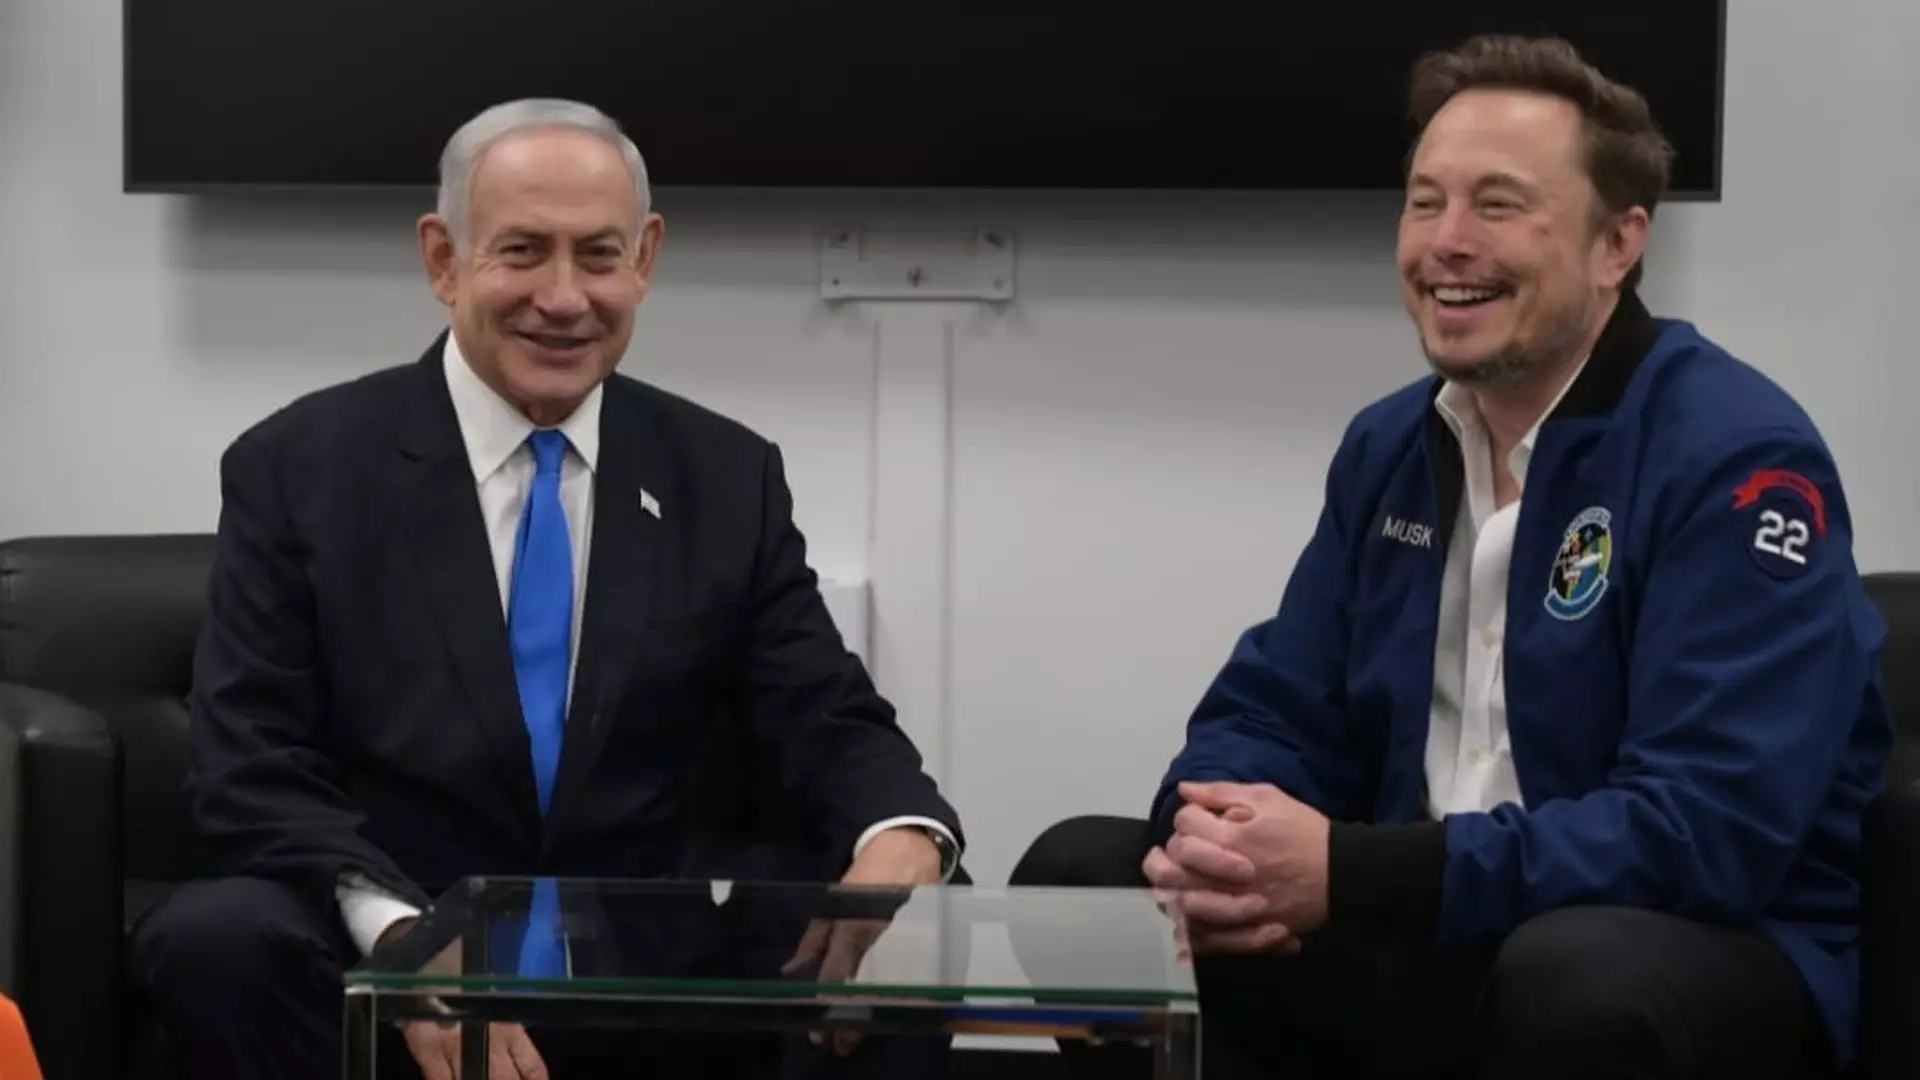 Musk to meet Israel PM amid anti-Semitism row; Sunak slams anti-Jewish hatred